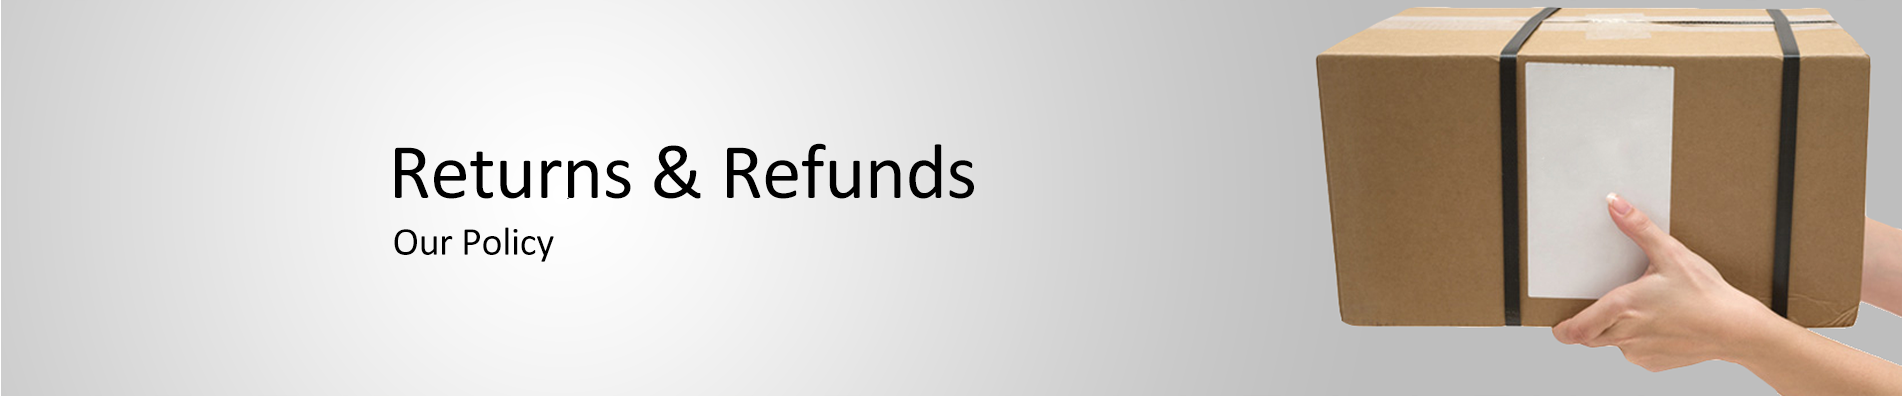 Returns Refunds header